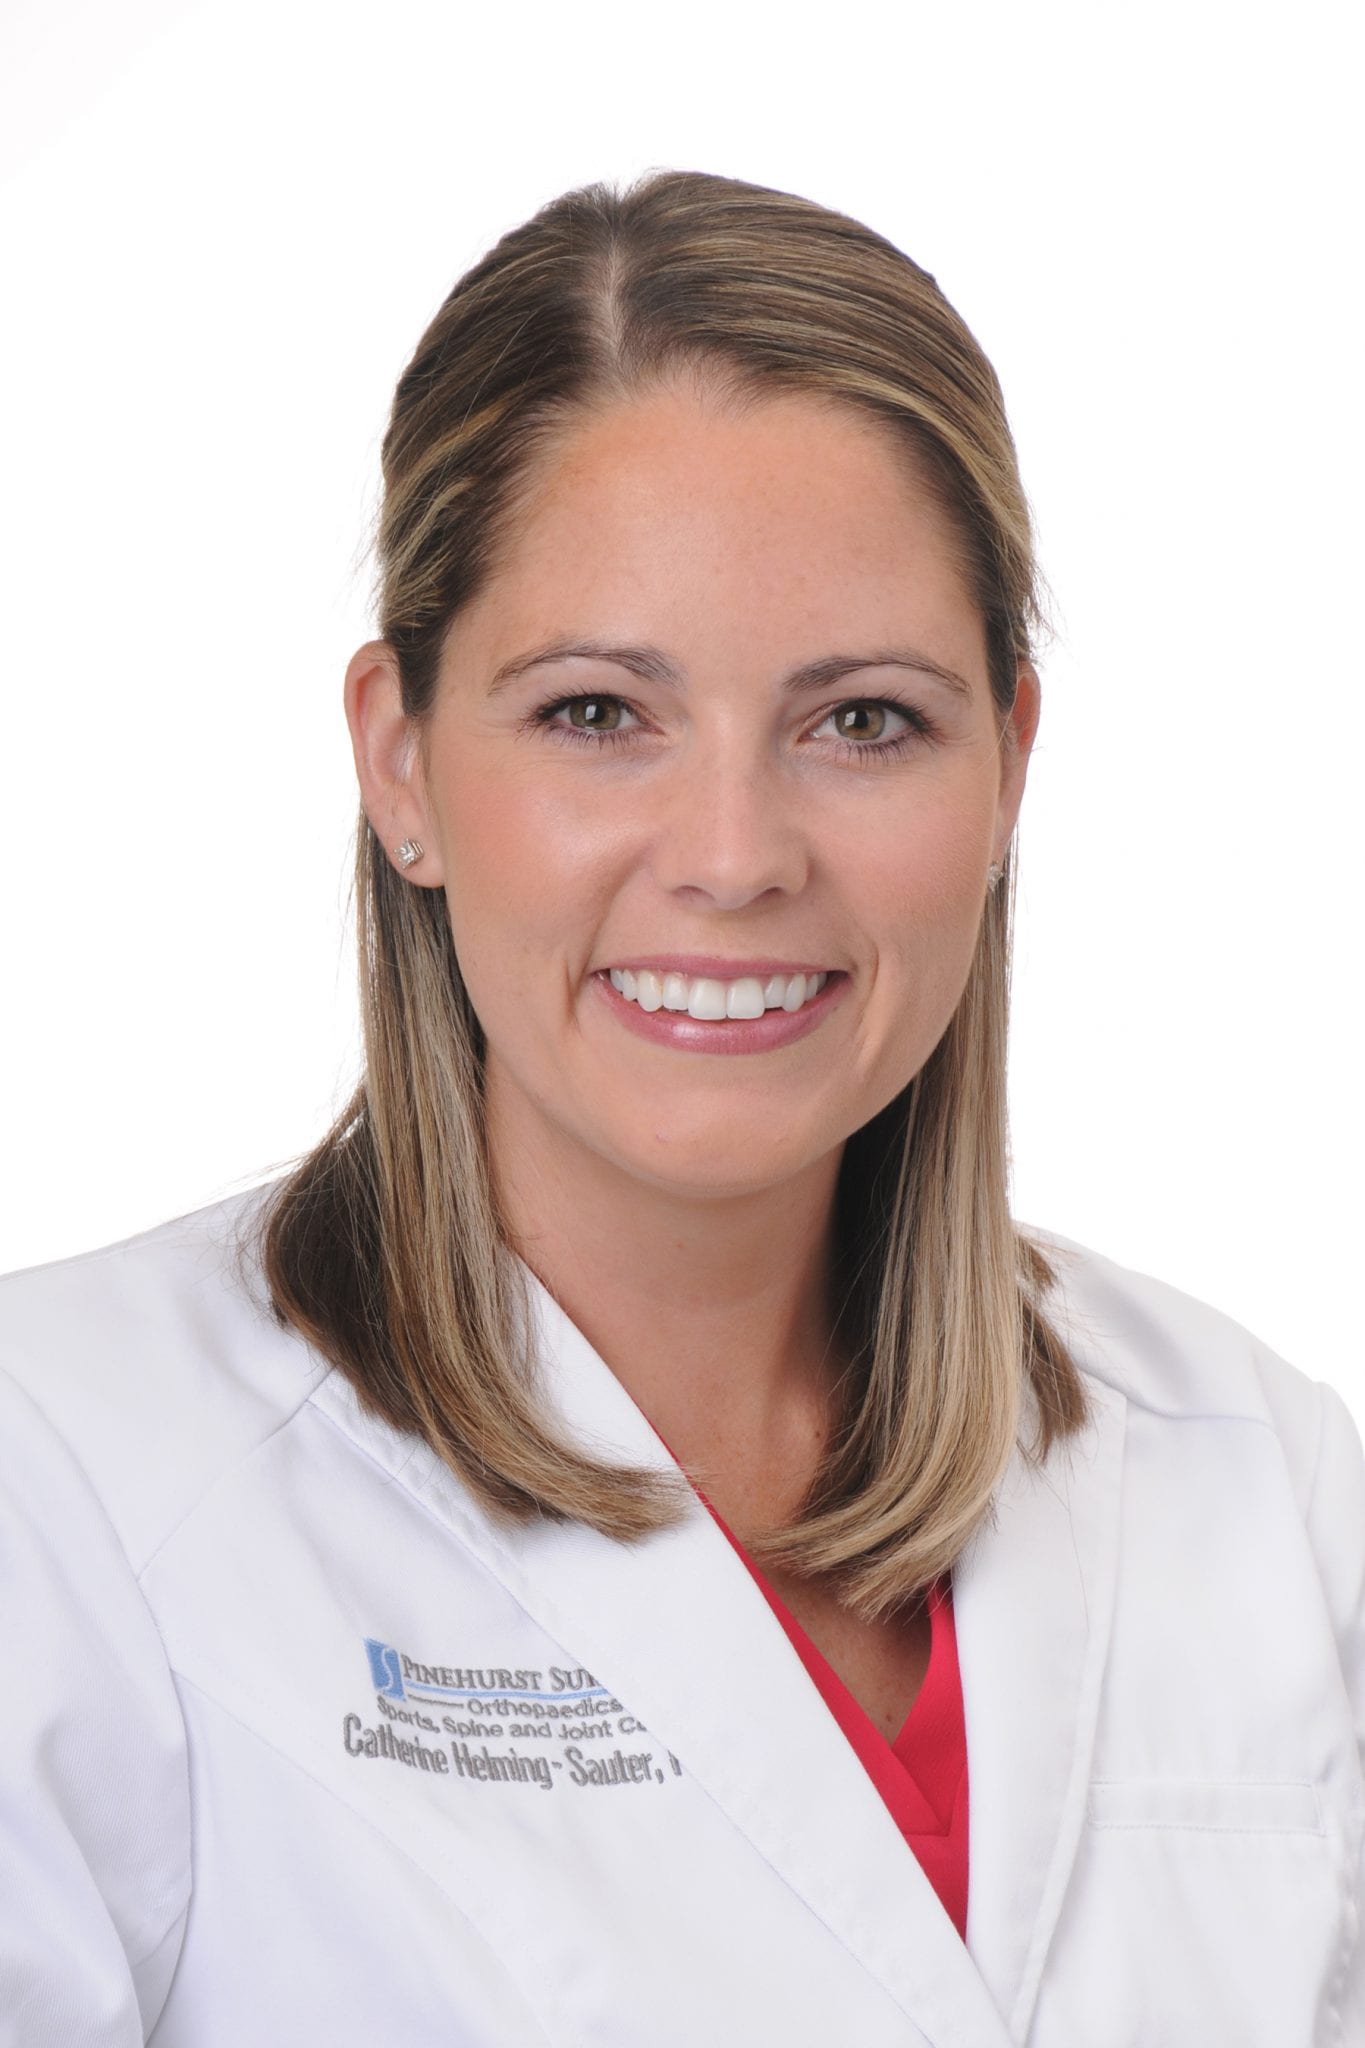 Catherine Jane Helming-Sauter, PA-C | Pinehurst Surgical Clinic